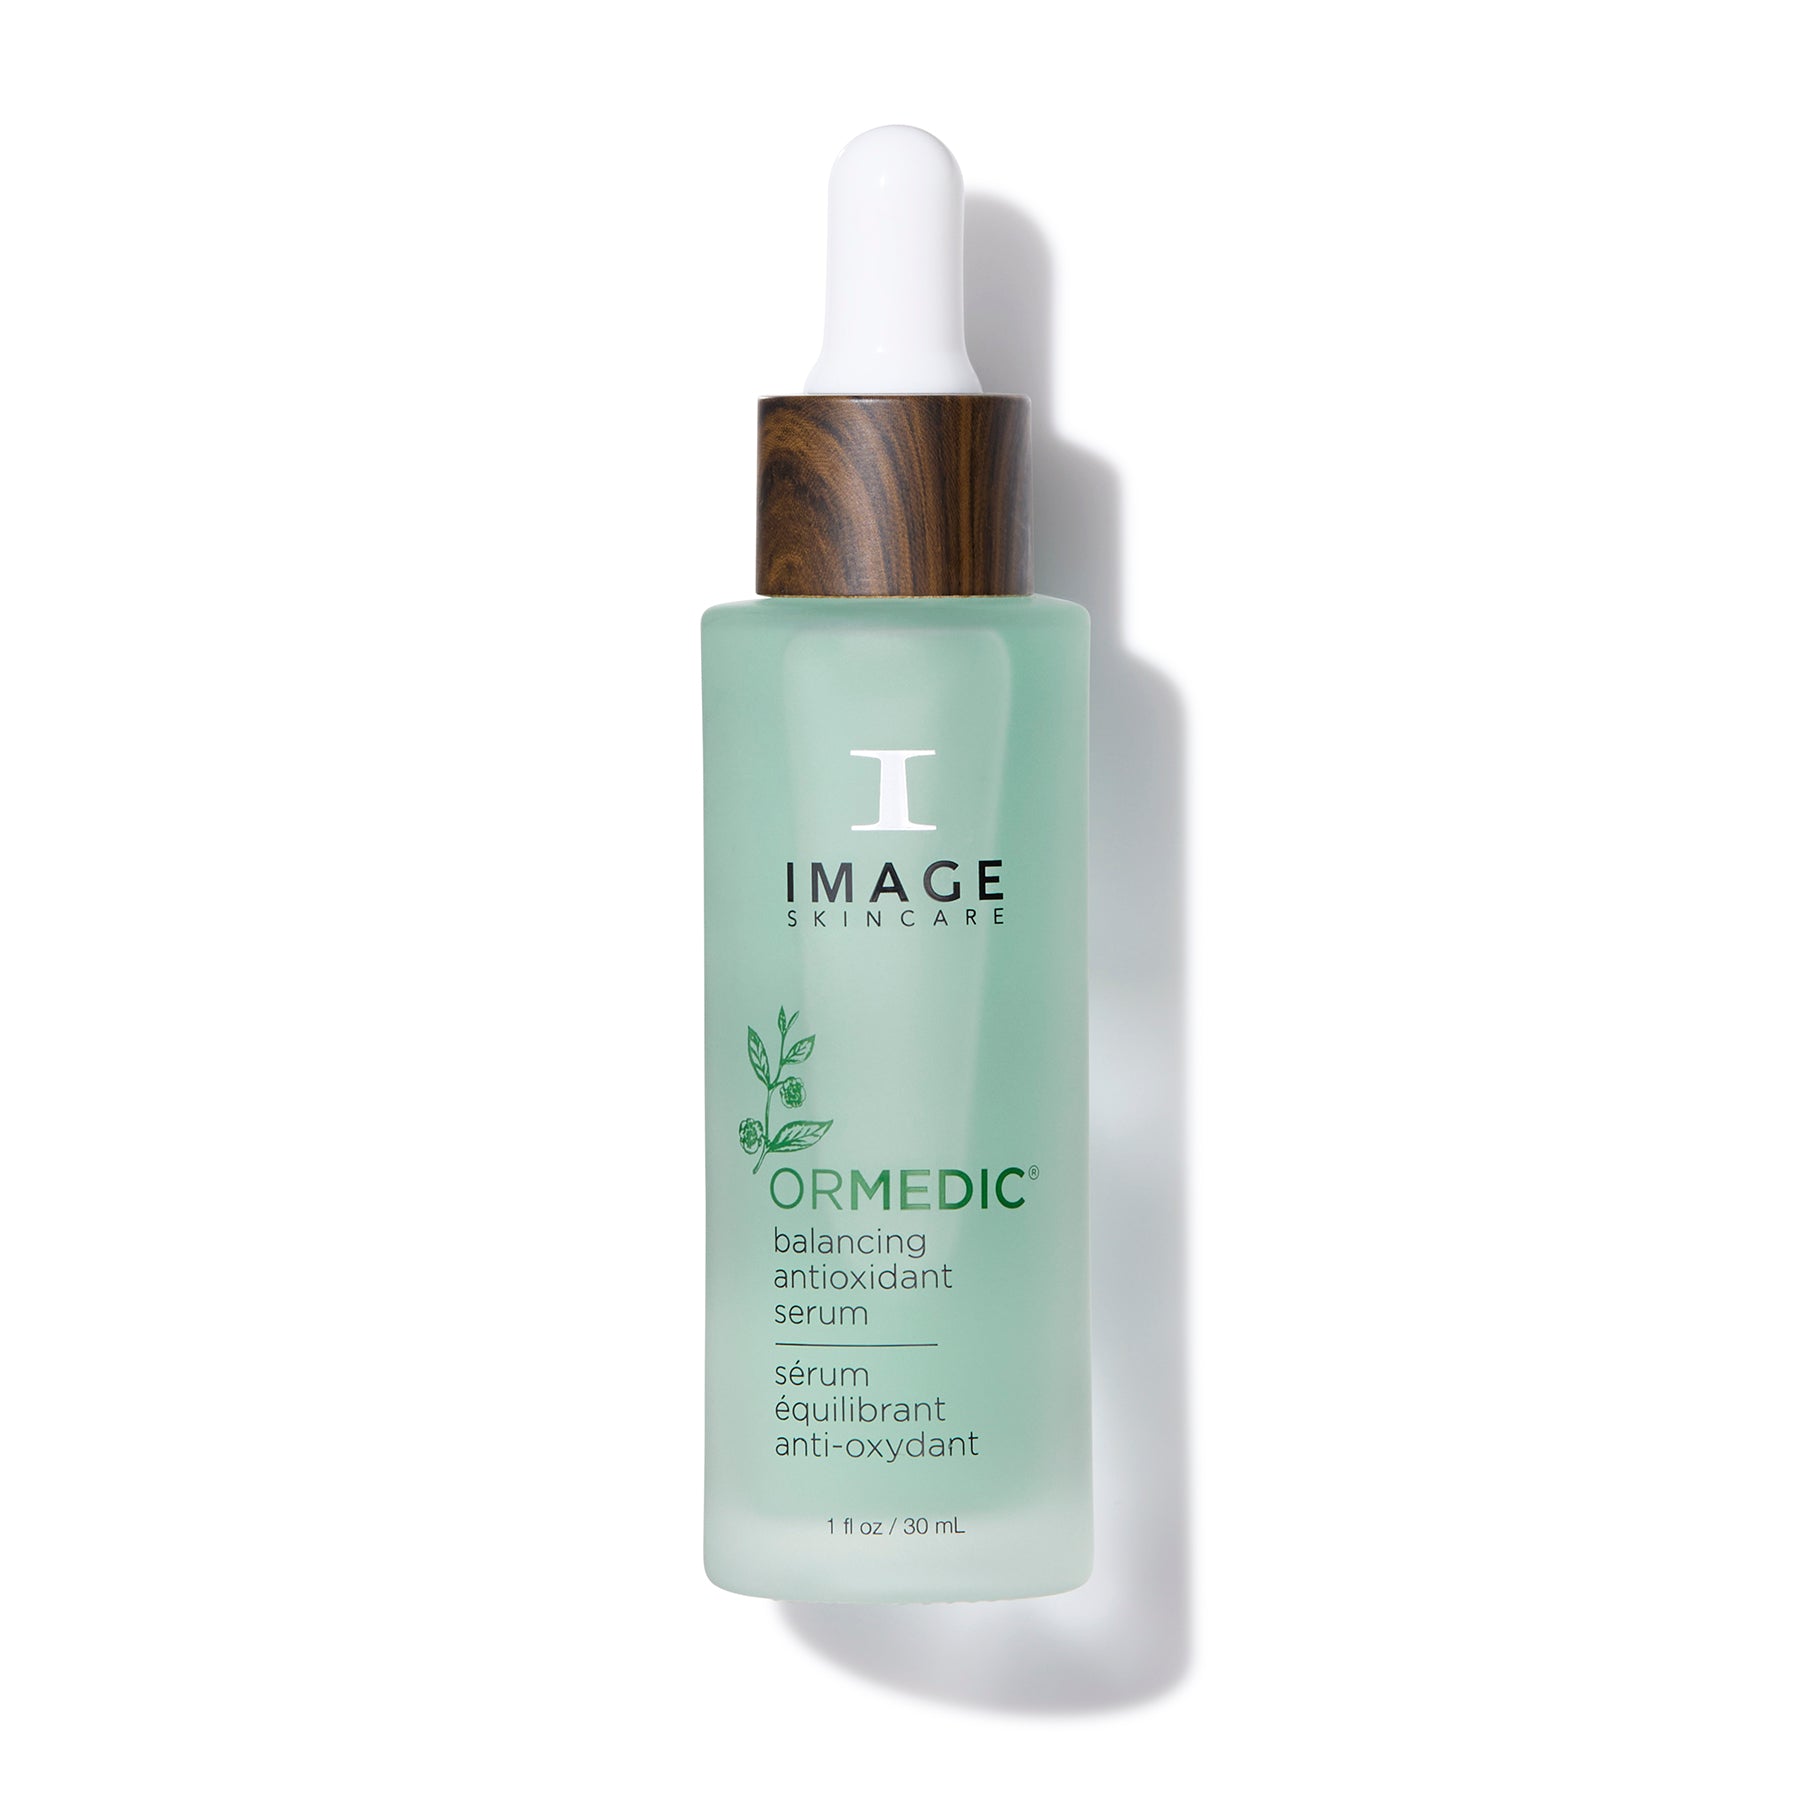 Image Skincare Ormedic Balancing Antioxidant Serum Shop At Exclusive Beauty